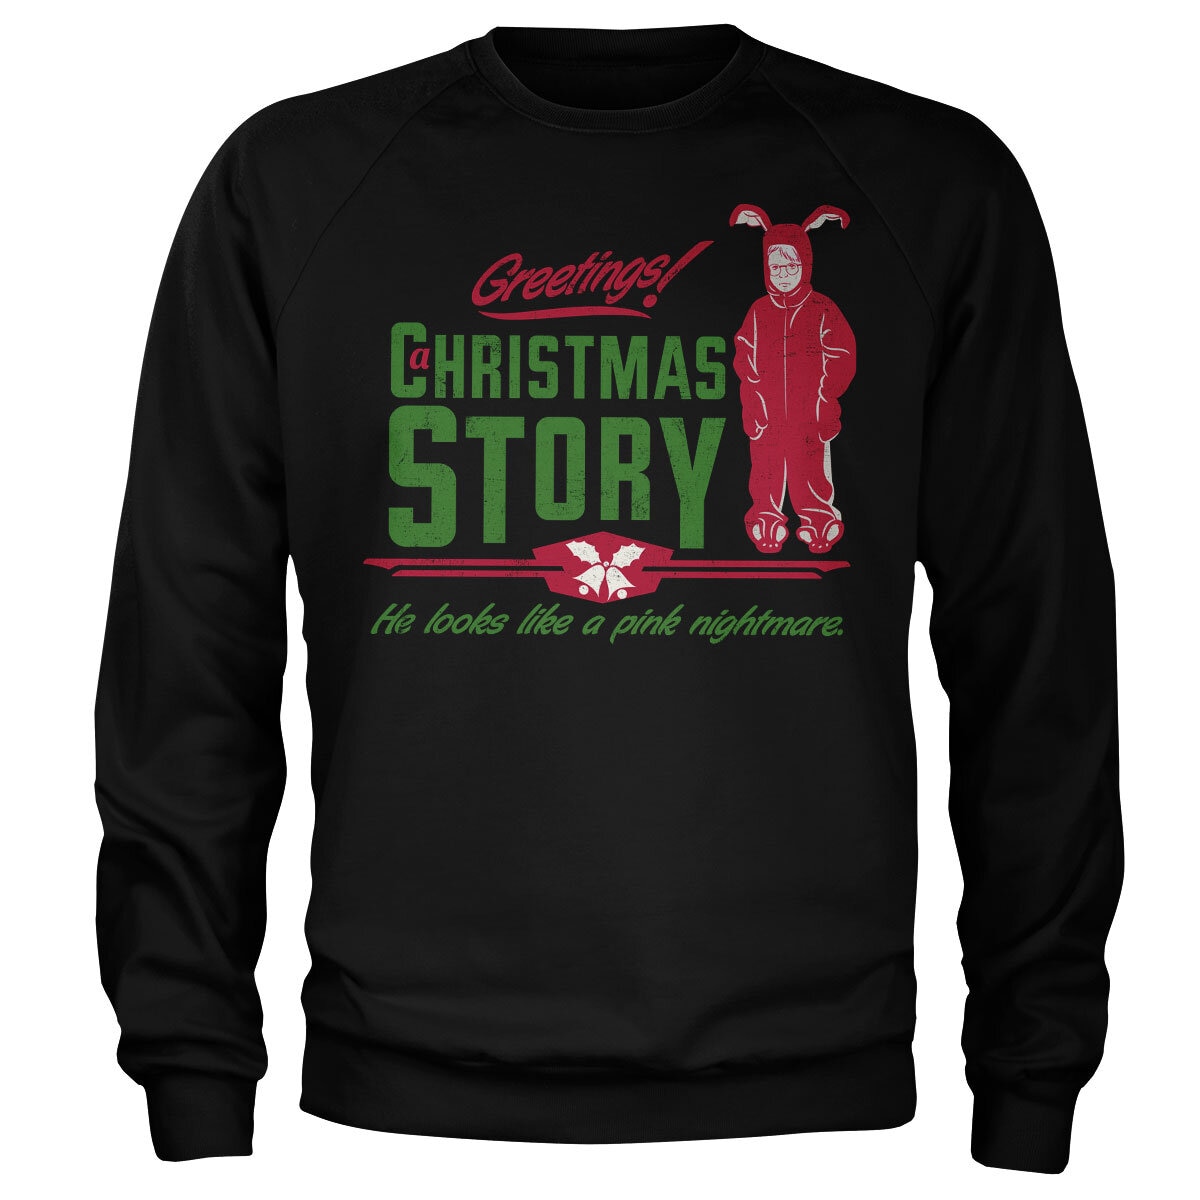 A Christmas Story - Pink Nightmare Sweatshirt